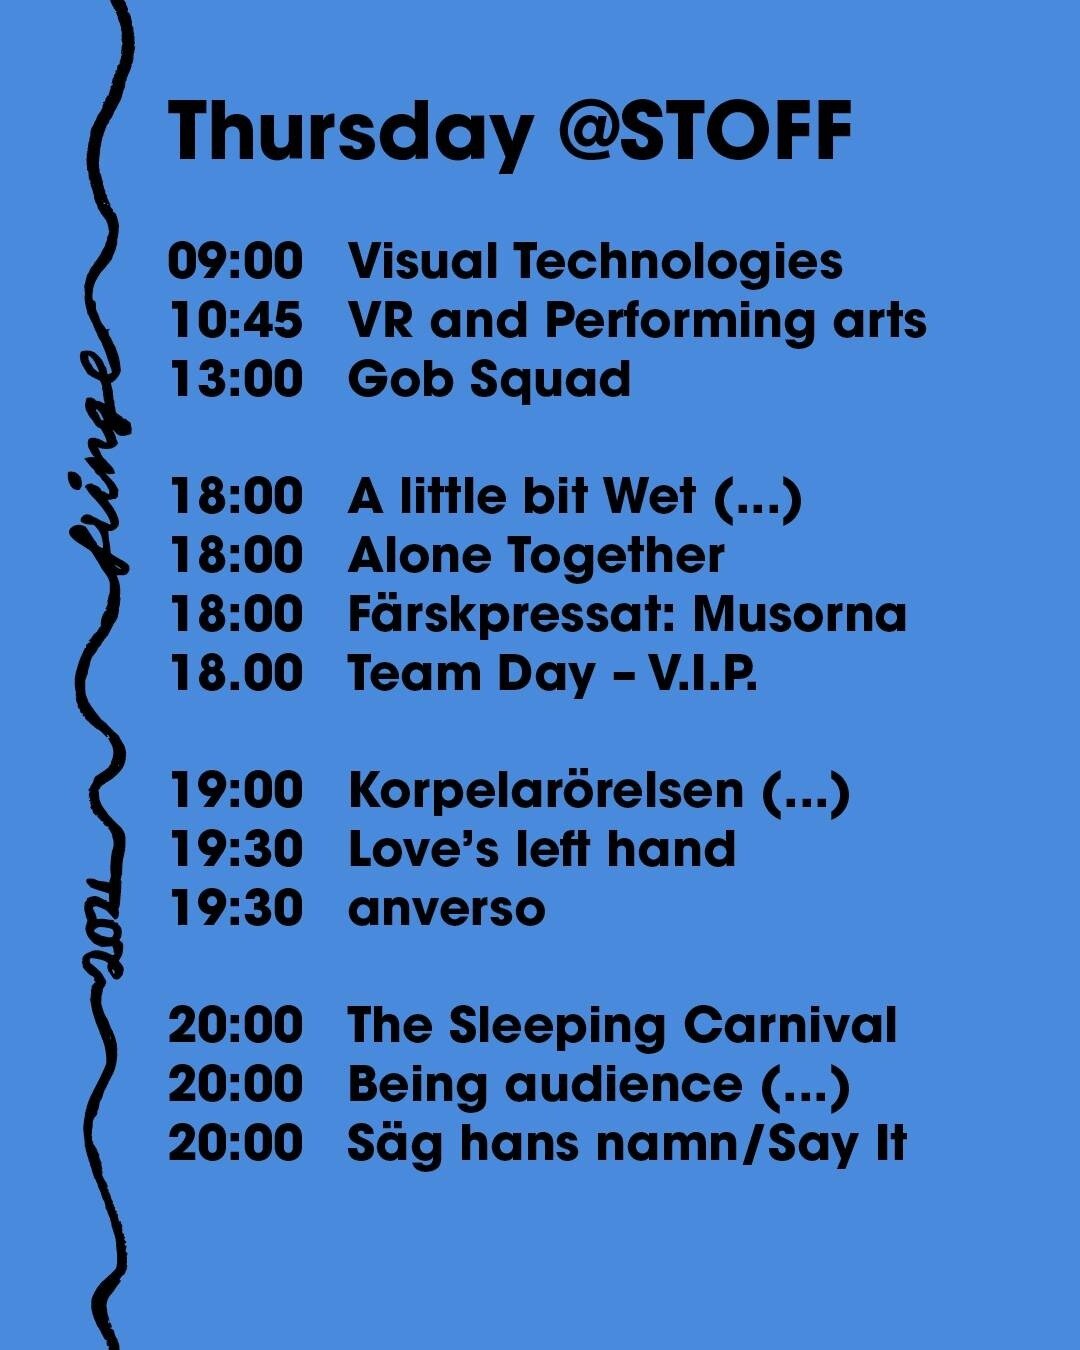 THURSDAY! Today's schedule 🔥

#STOFF #NewWorkForANewReality #STOFF2021 #Fringe #Fringefamily @nordicfringenet 
.
.
.
.
.
#kulturstockholm #Kulturistatipsar #seochg&ouml;raistockholm #Fringe
#stockholmperformanceart #performanceartist #alternativethe